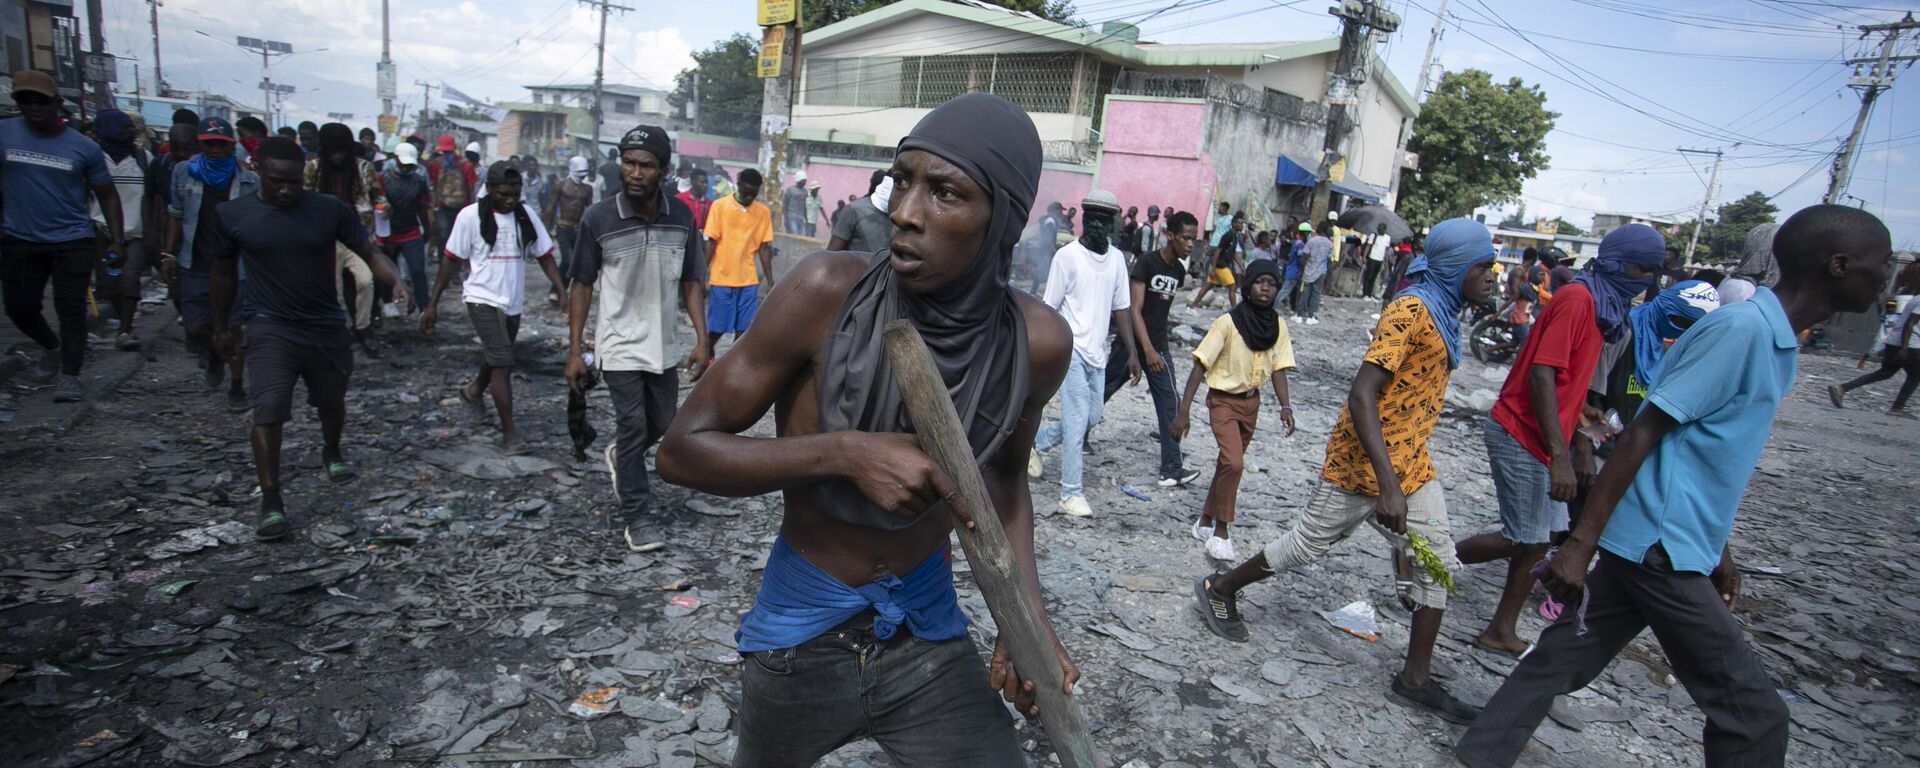 Un manifestante en Haití (archivo) - Sputnik Mundo, 1920, 09.05.2023